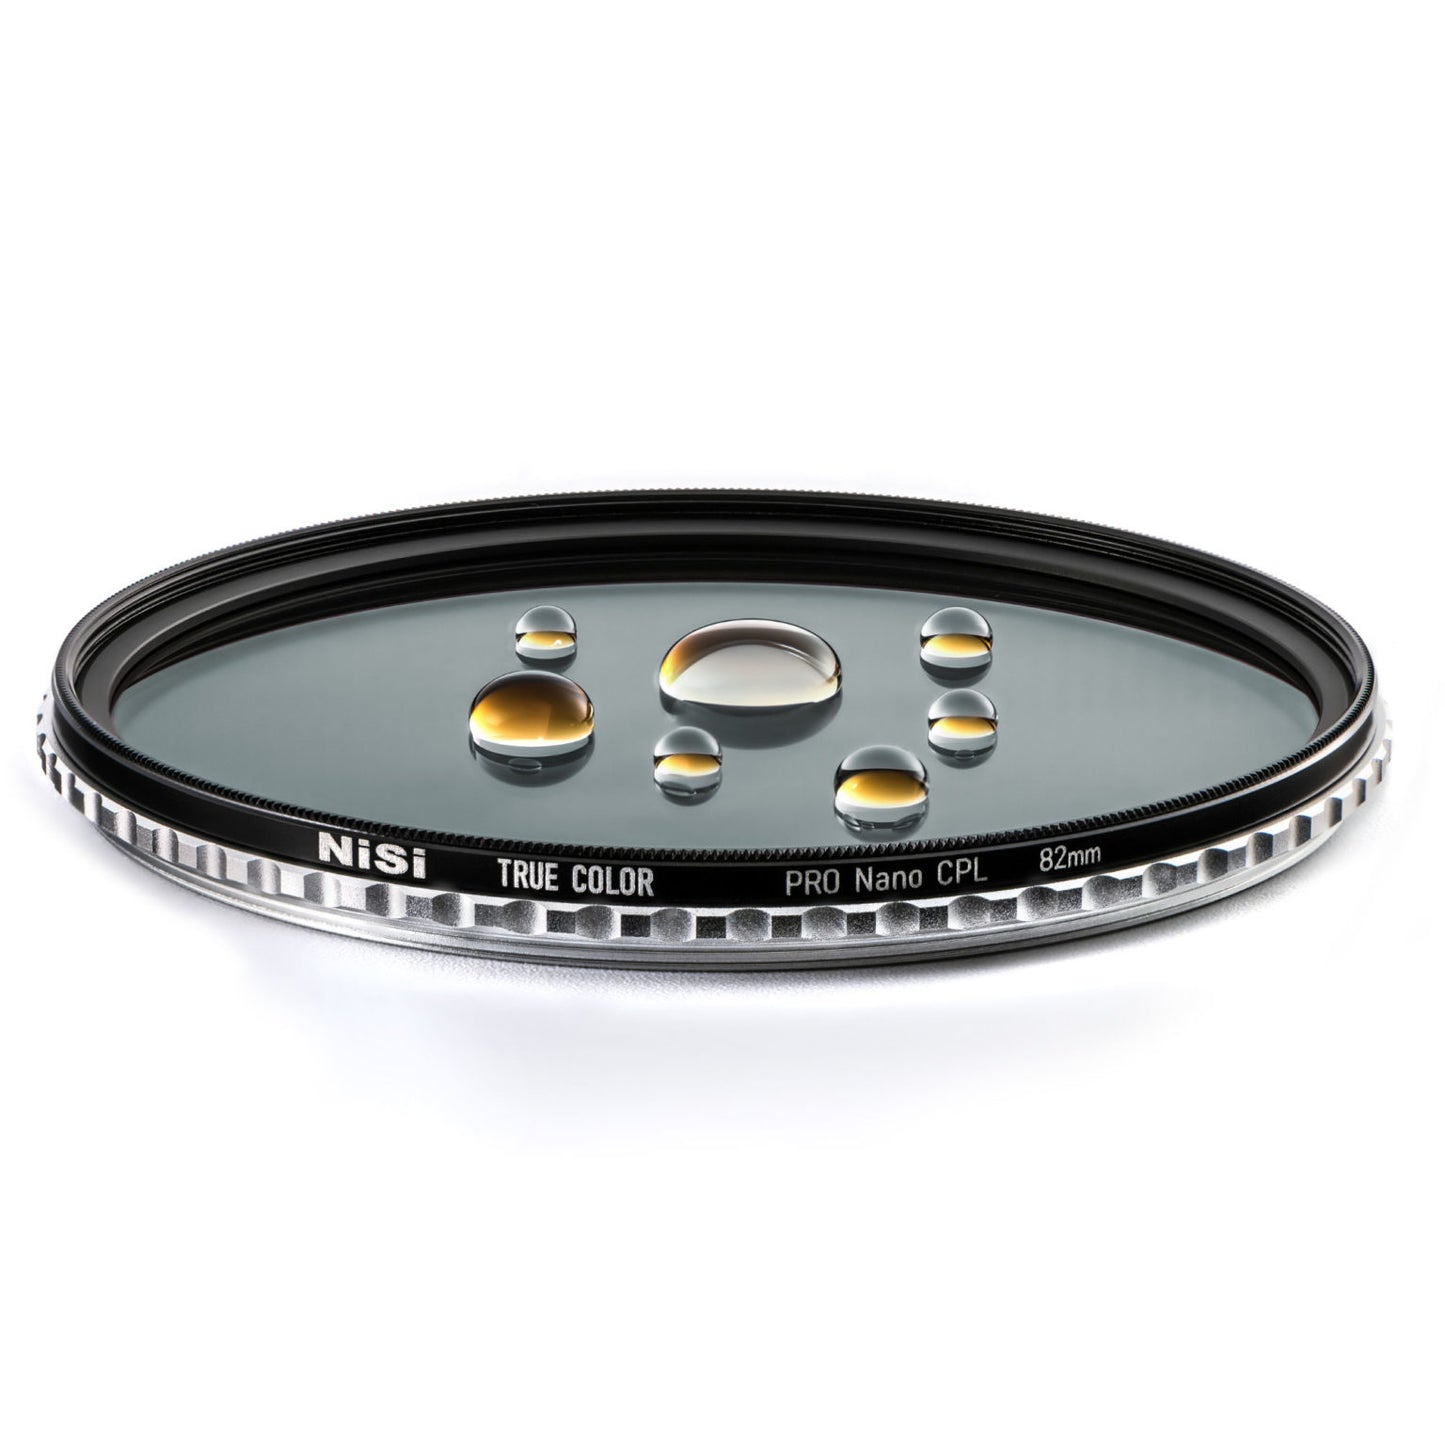 NiSi 62mm True Color Pro Nano CPL Circular Polarizing Filter